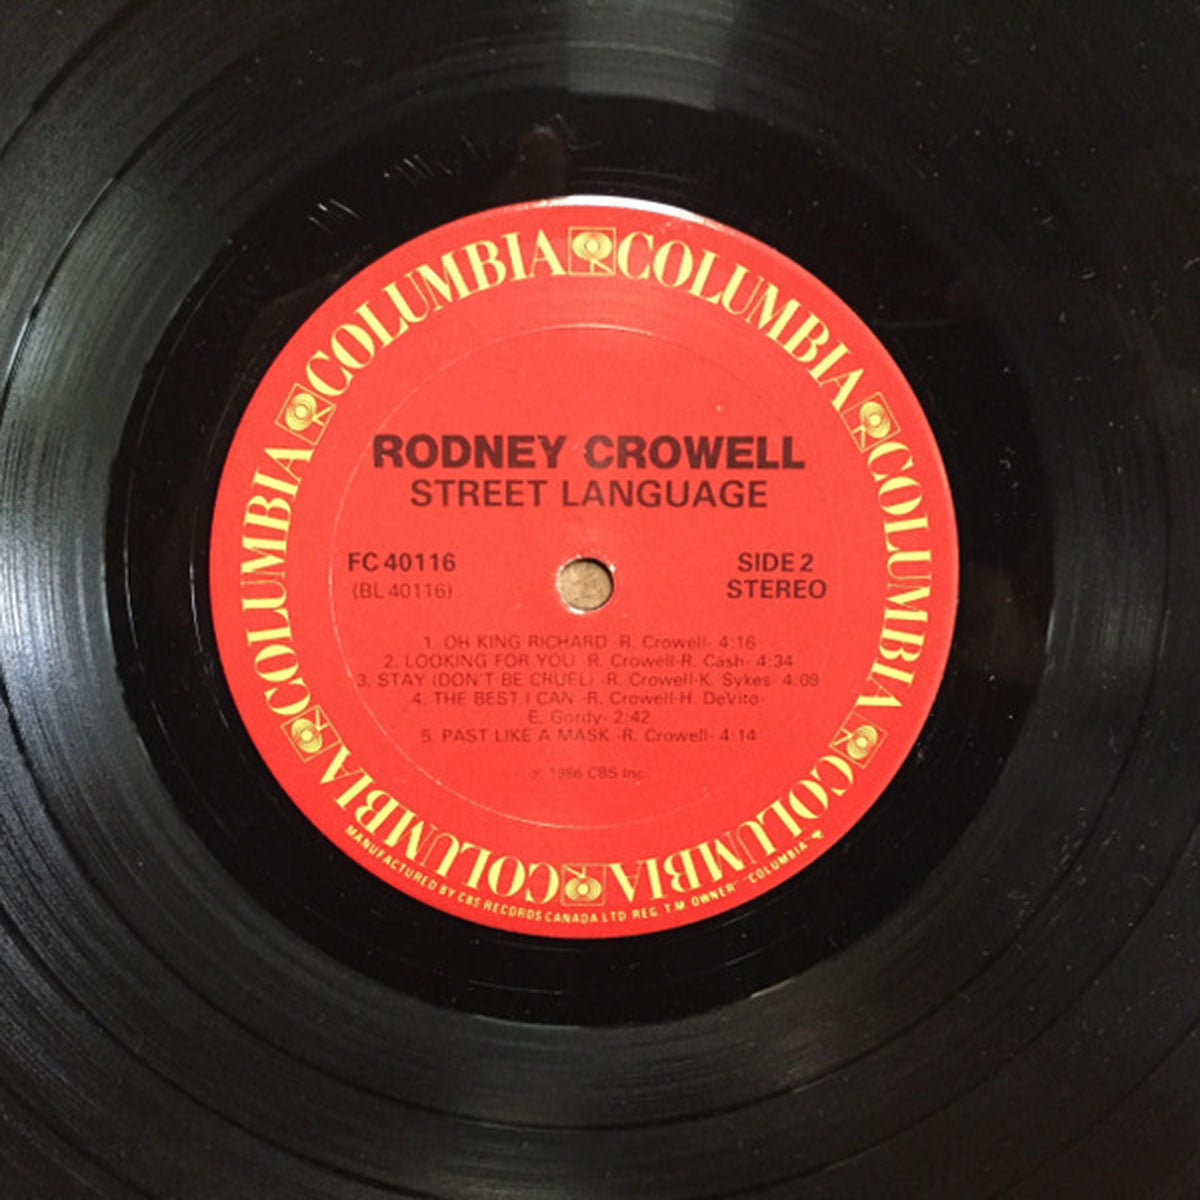 Rodney Crowell – Street Language